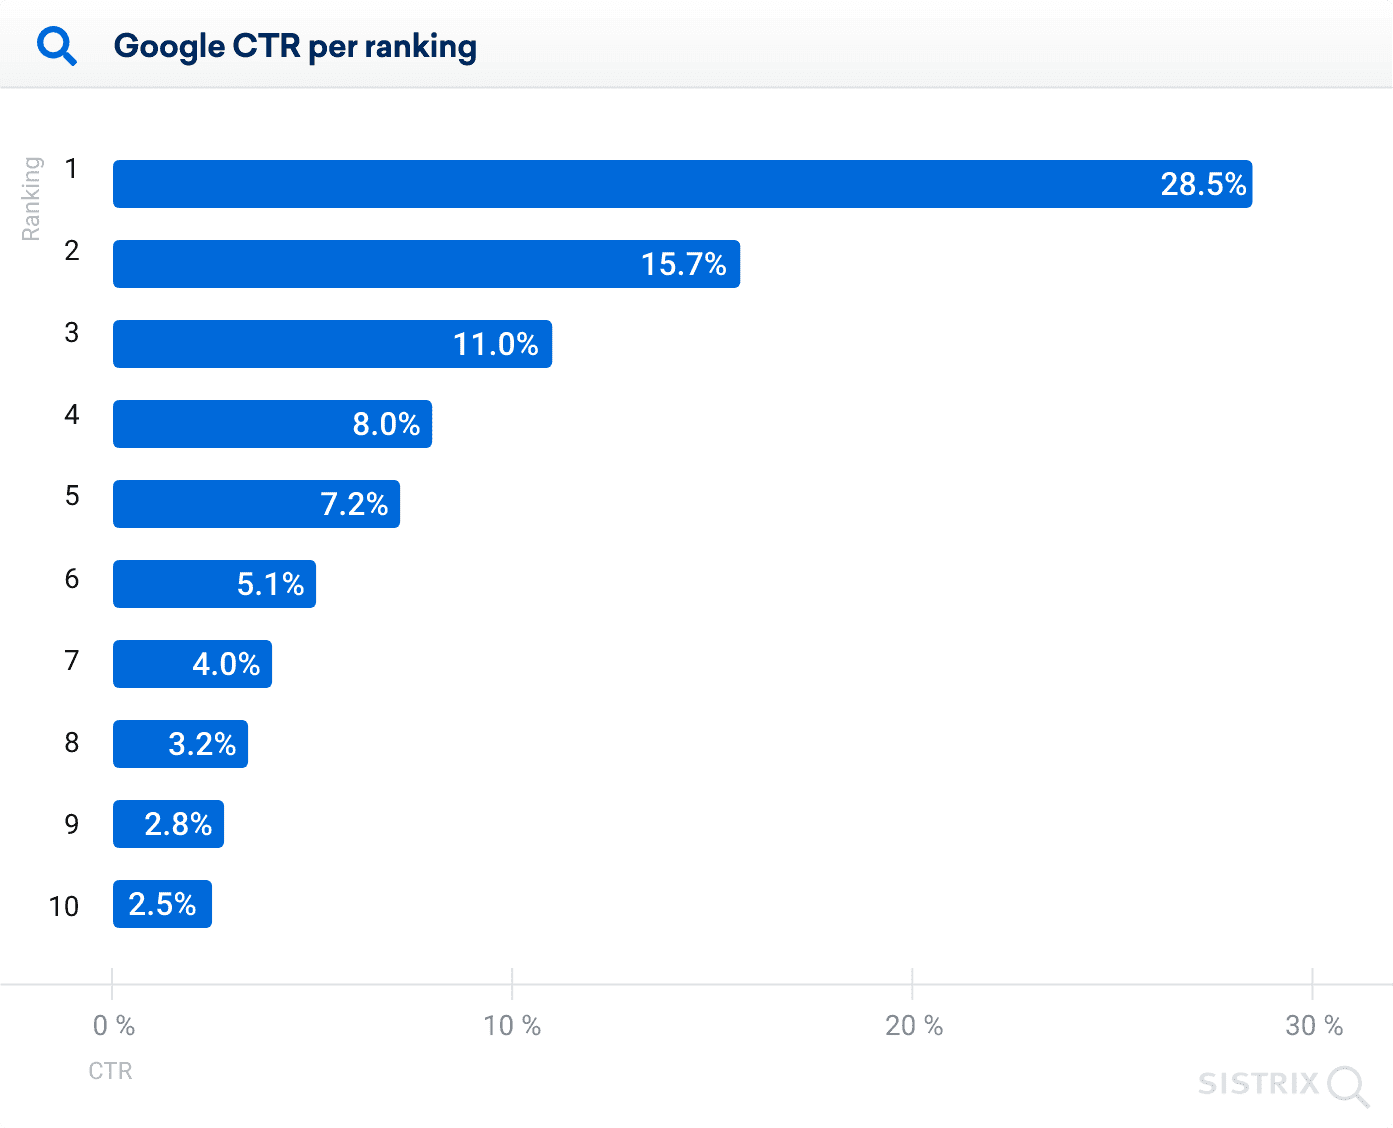 google ctr per ranking chart